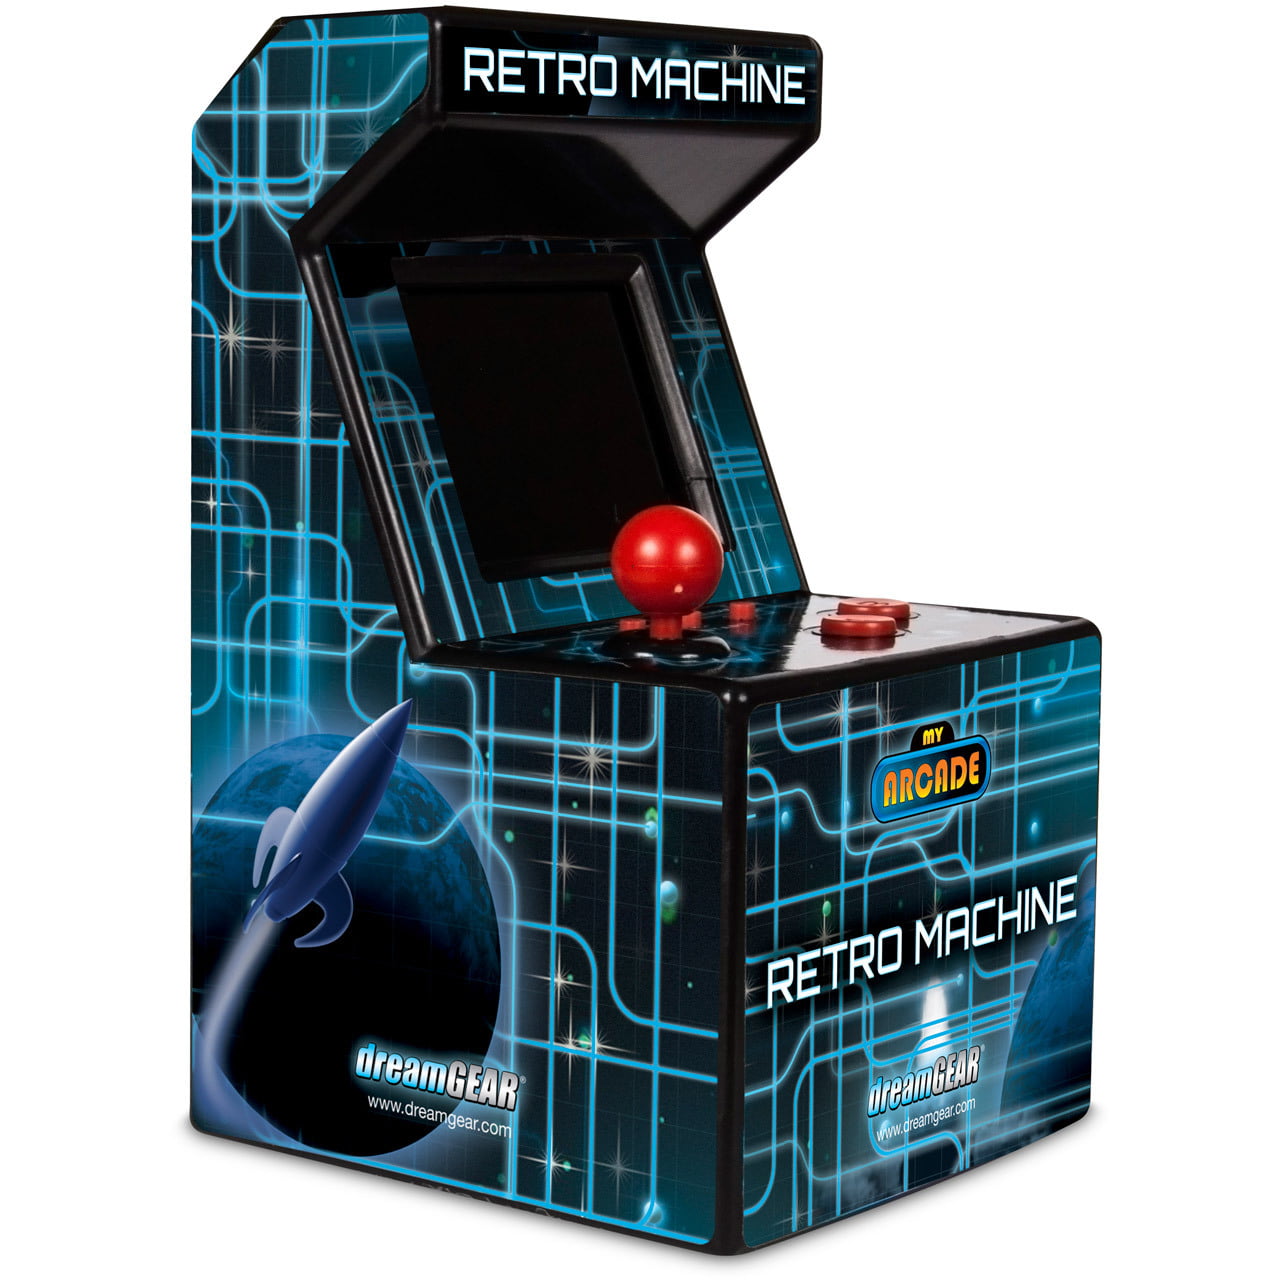 My Arcade Retro Arcade Machine: Portable Gaming Mini Arcade Cabinet